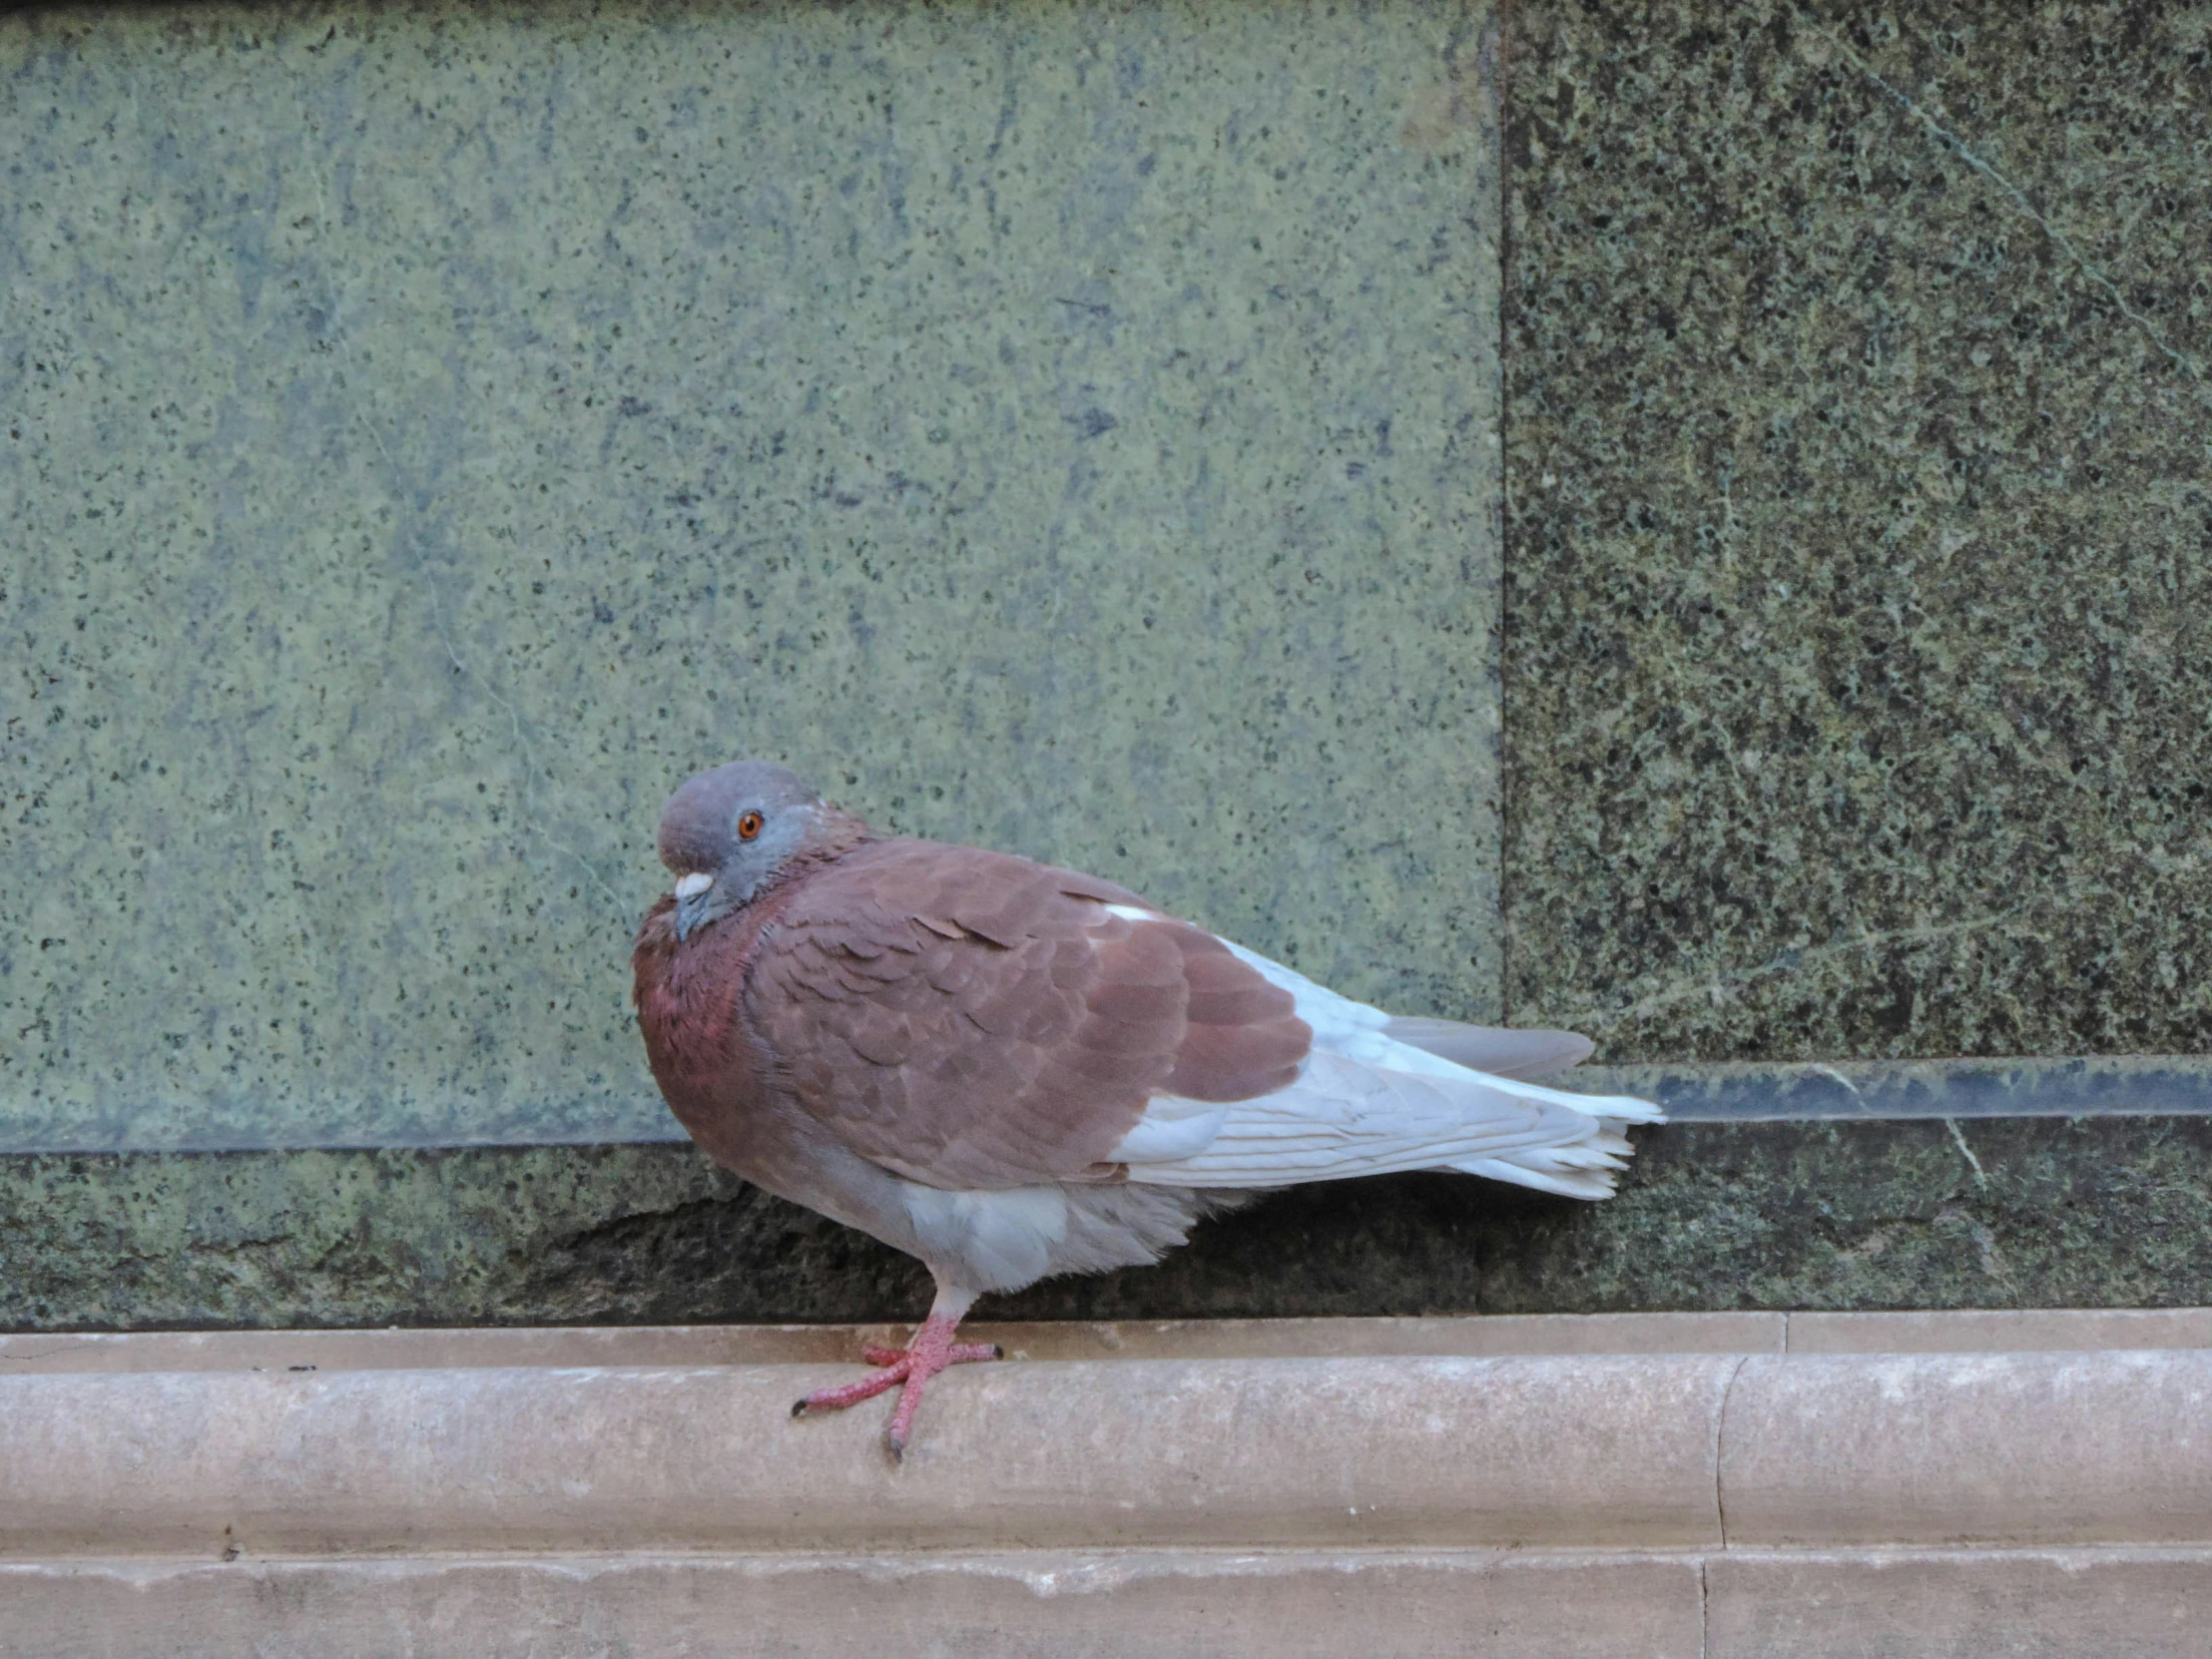 bird sitting on ledge near window, with green wall background